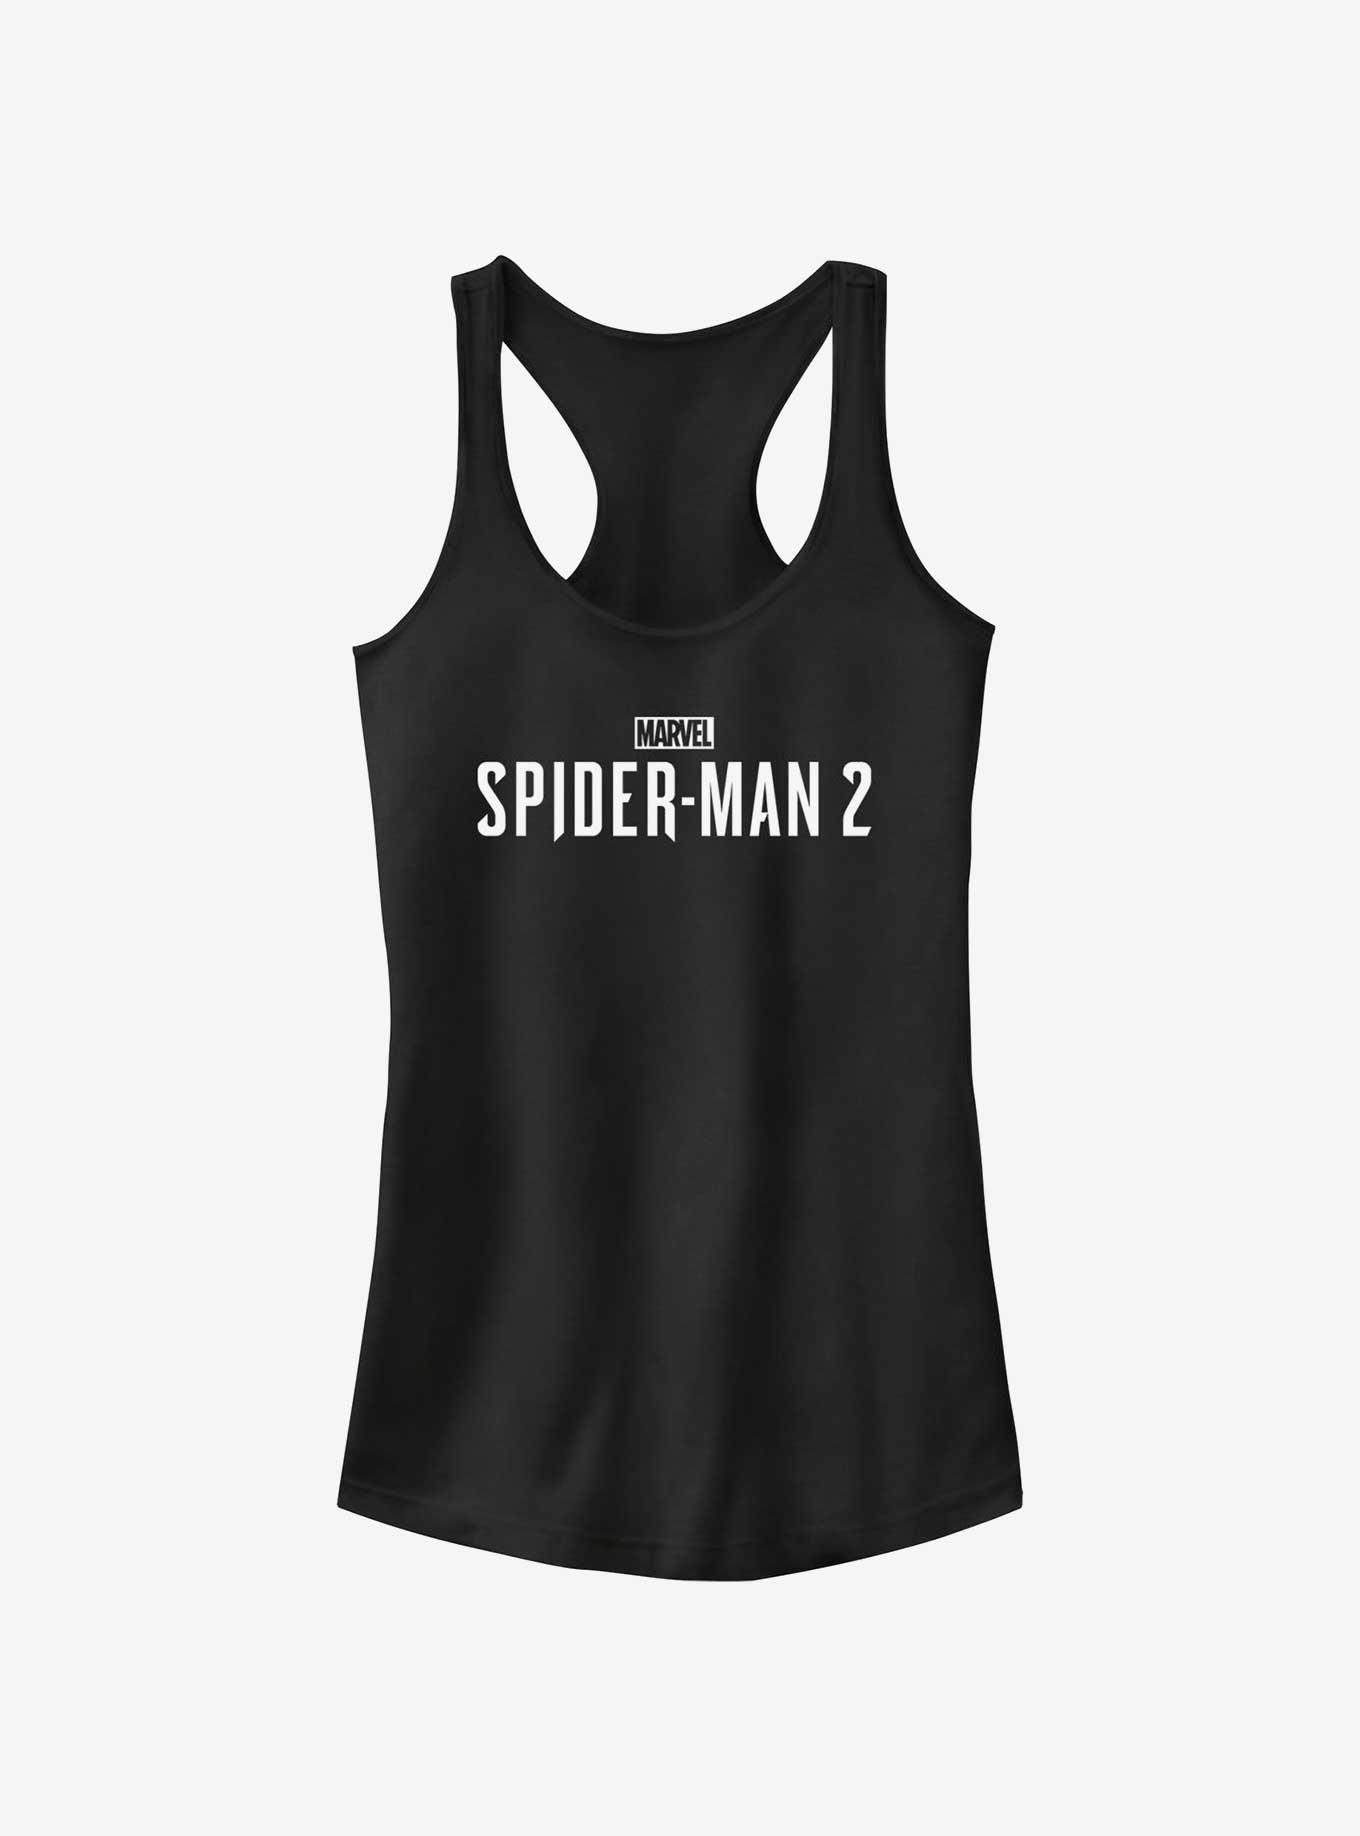 Marvel Spider-Man 2 Game Logo Girls Tank